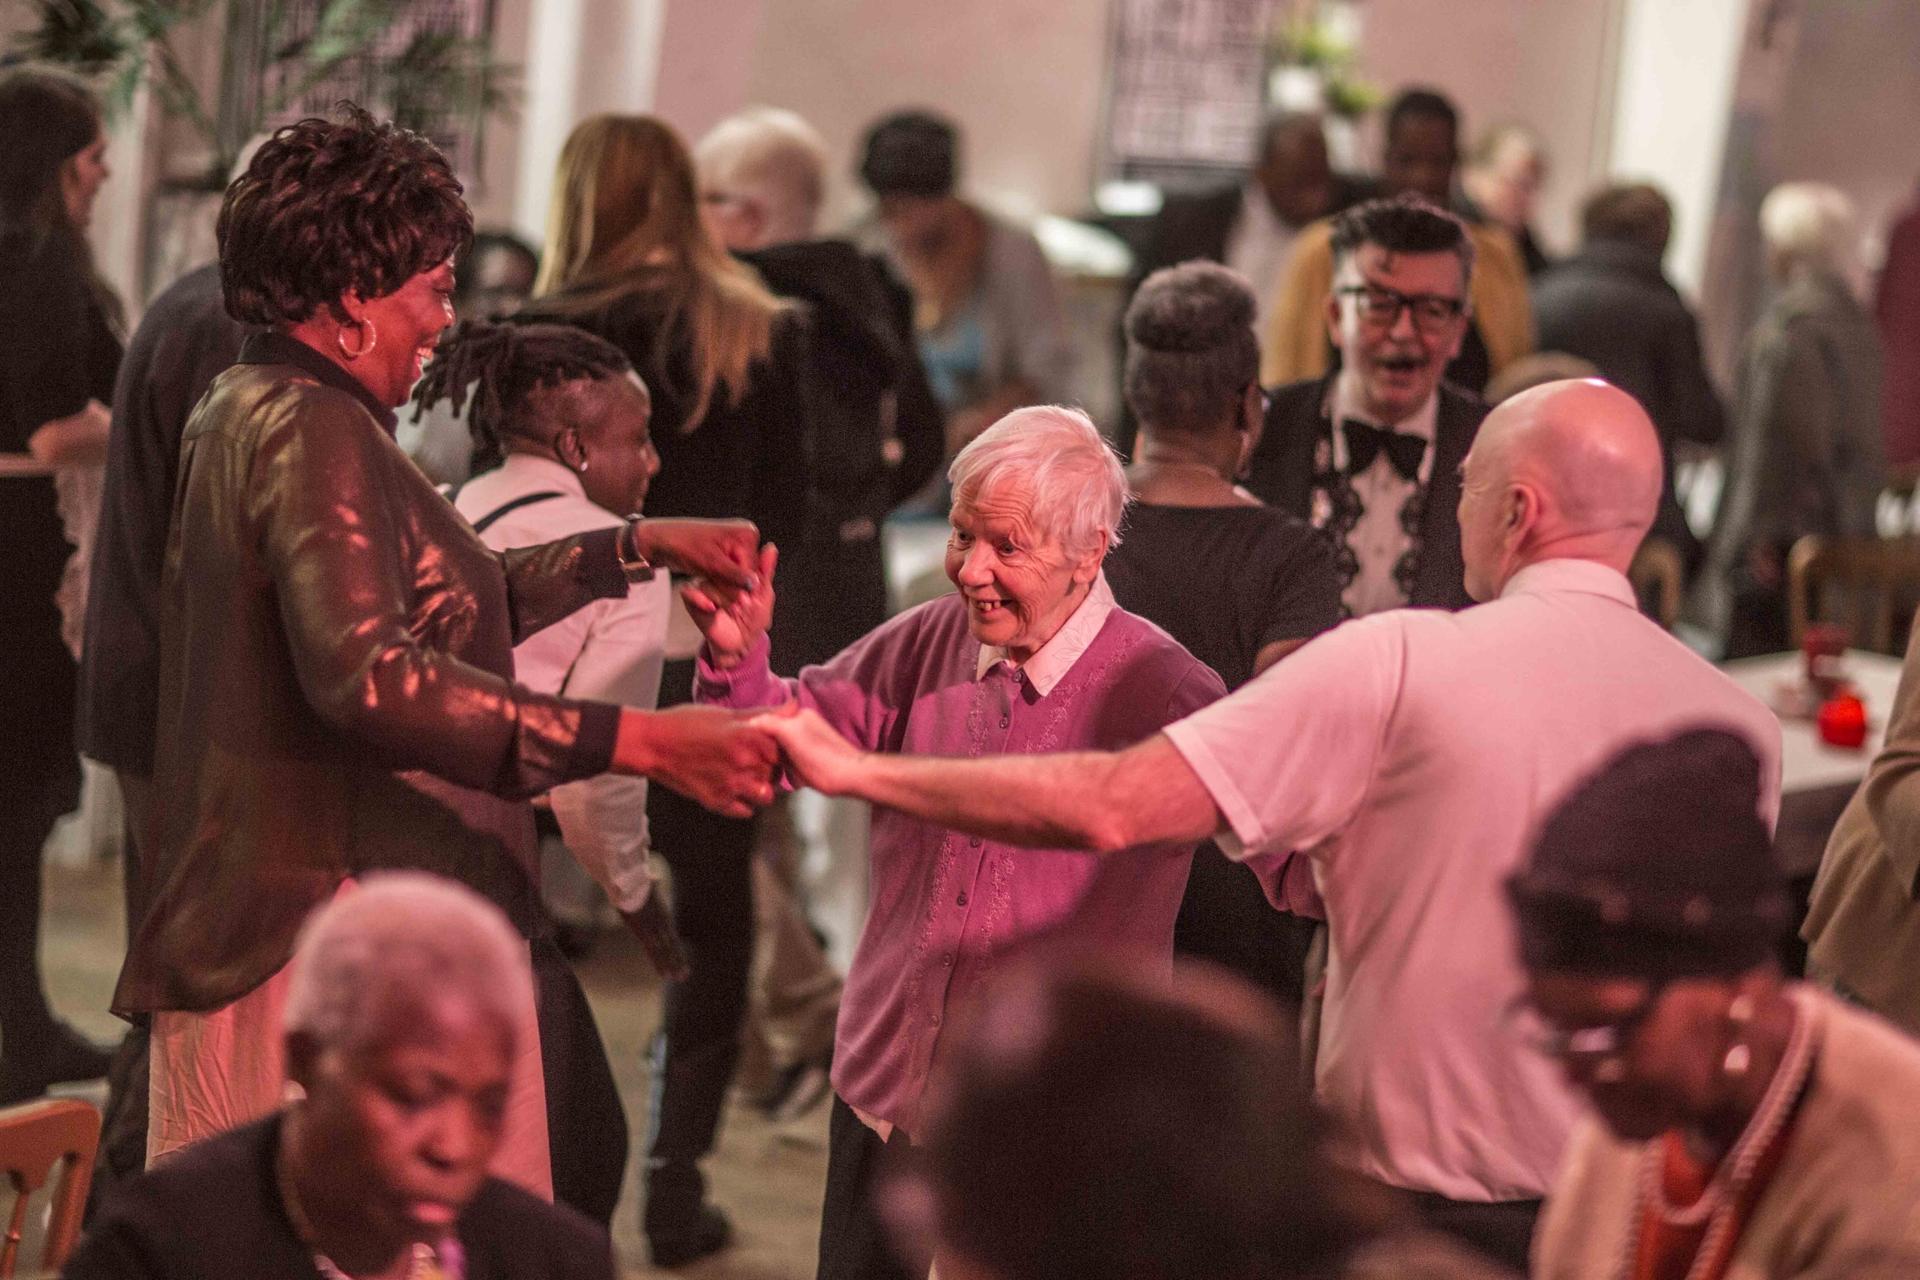 Volunteers bring the club to life each week, dancing along with club-goers.